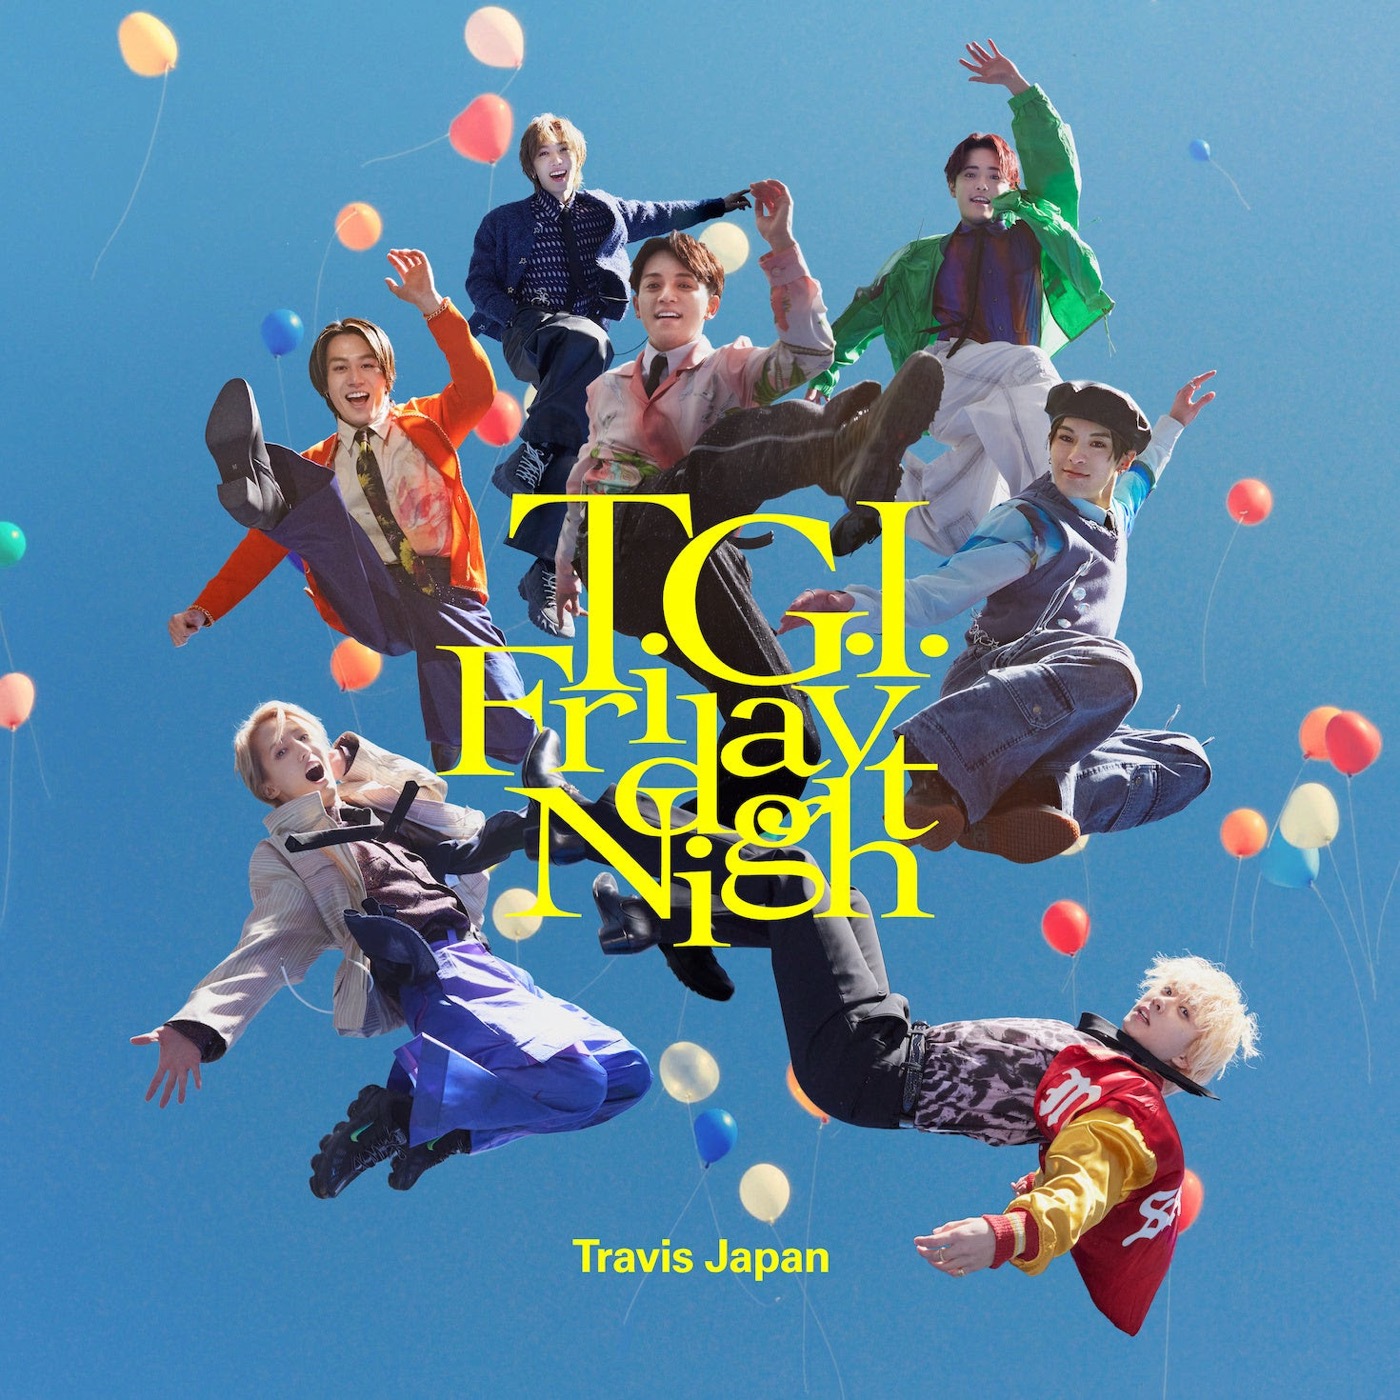 Travis Japan、新曲「T.G.I. Friday Night」MV公開！振付はs**t kingzが担当 - 画像一覧（1/1）